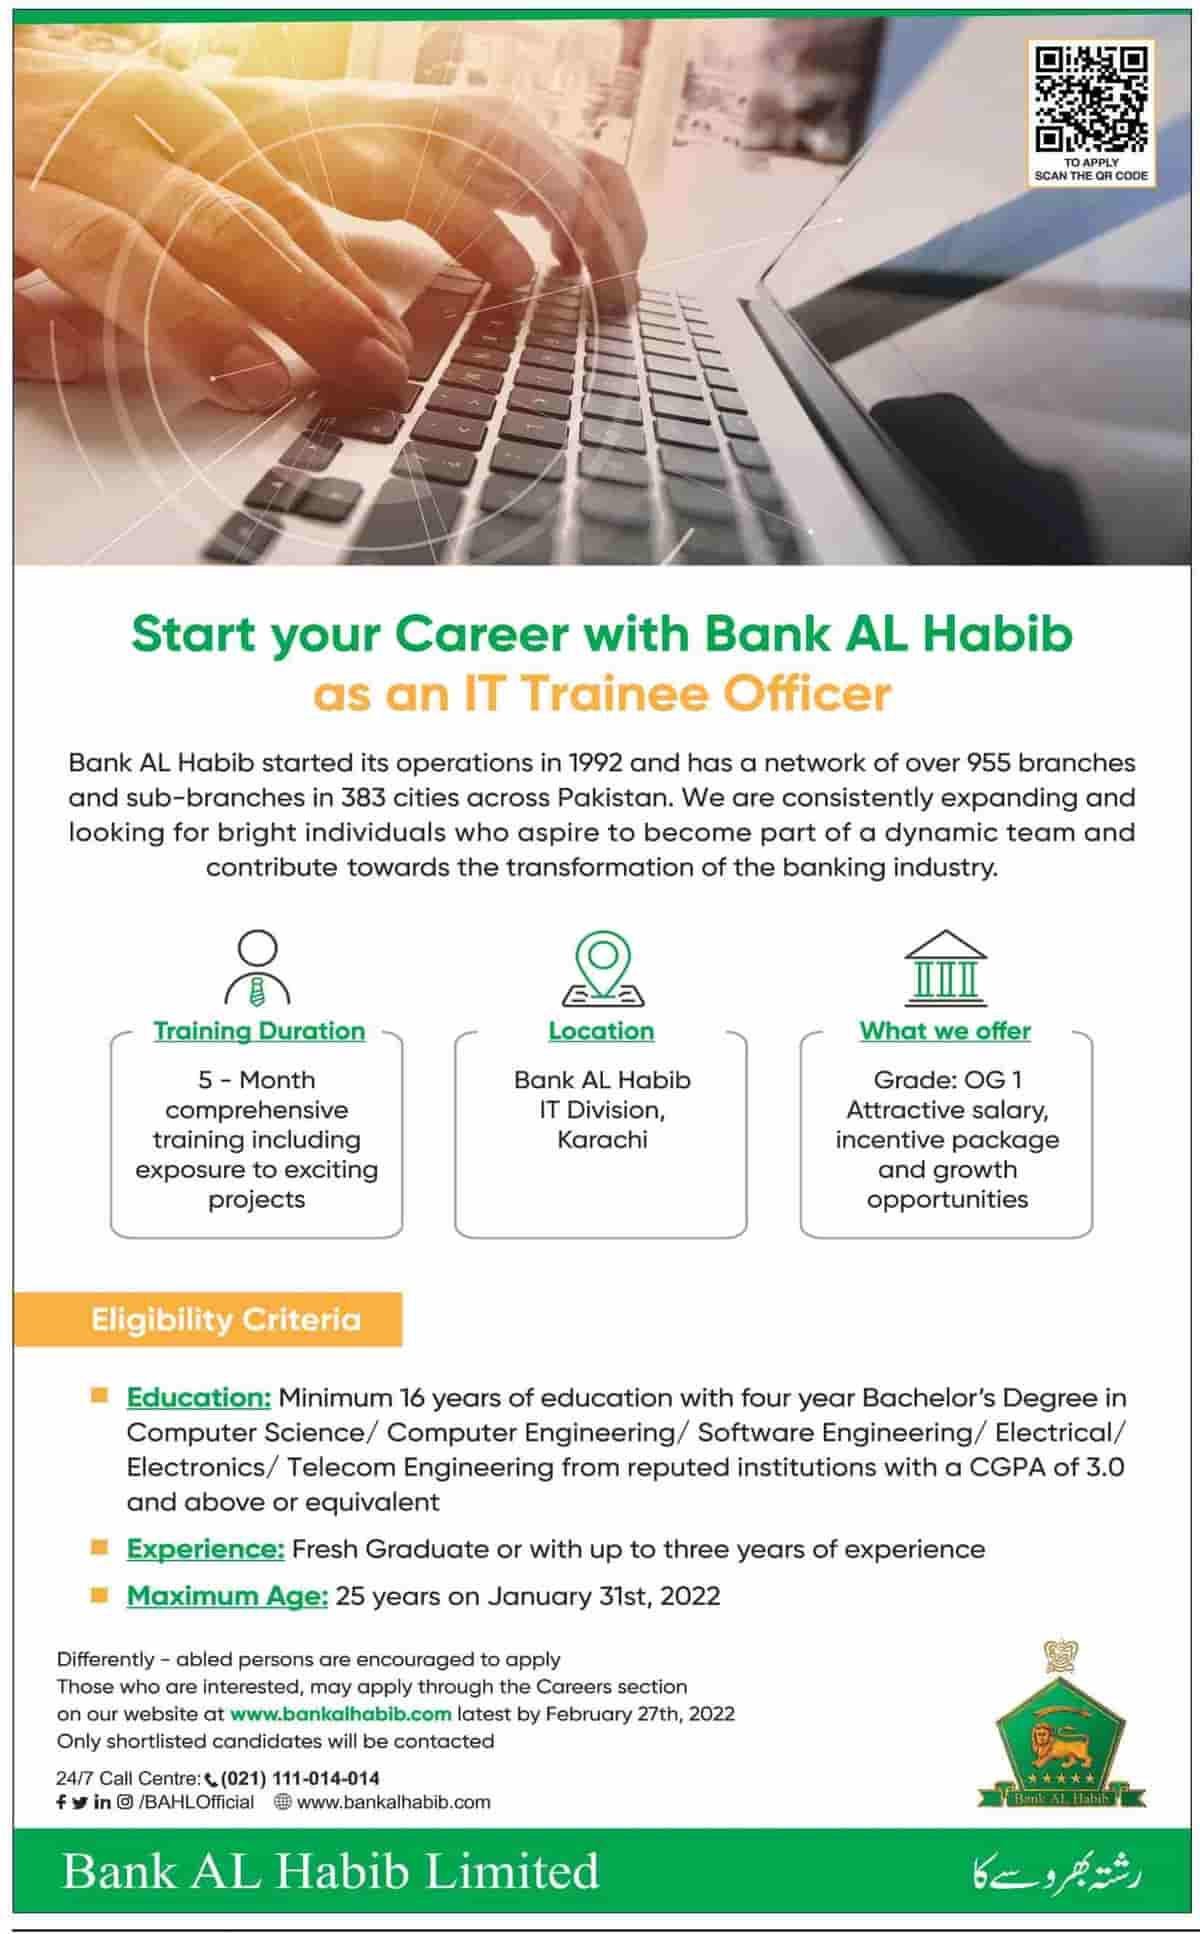 Bank Al Habib Limited IT Trainee Officer Jobs 2022 Apply Online Latest